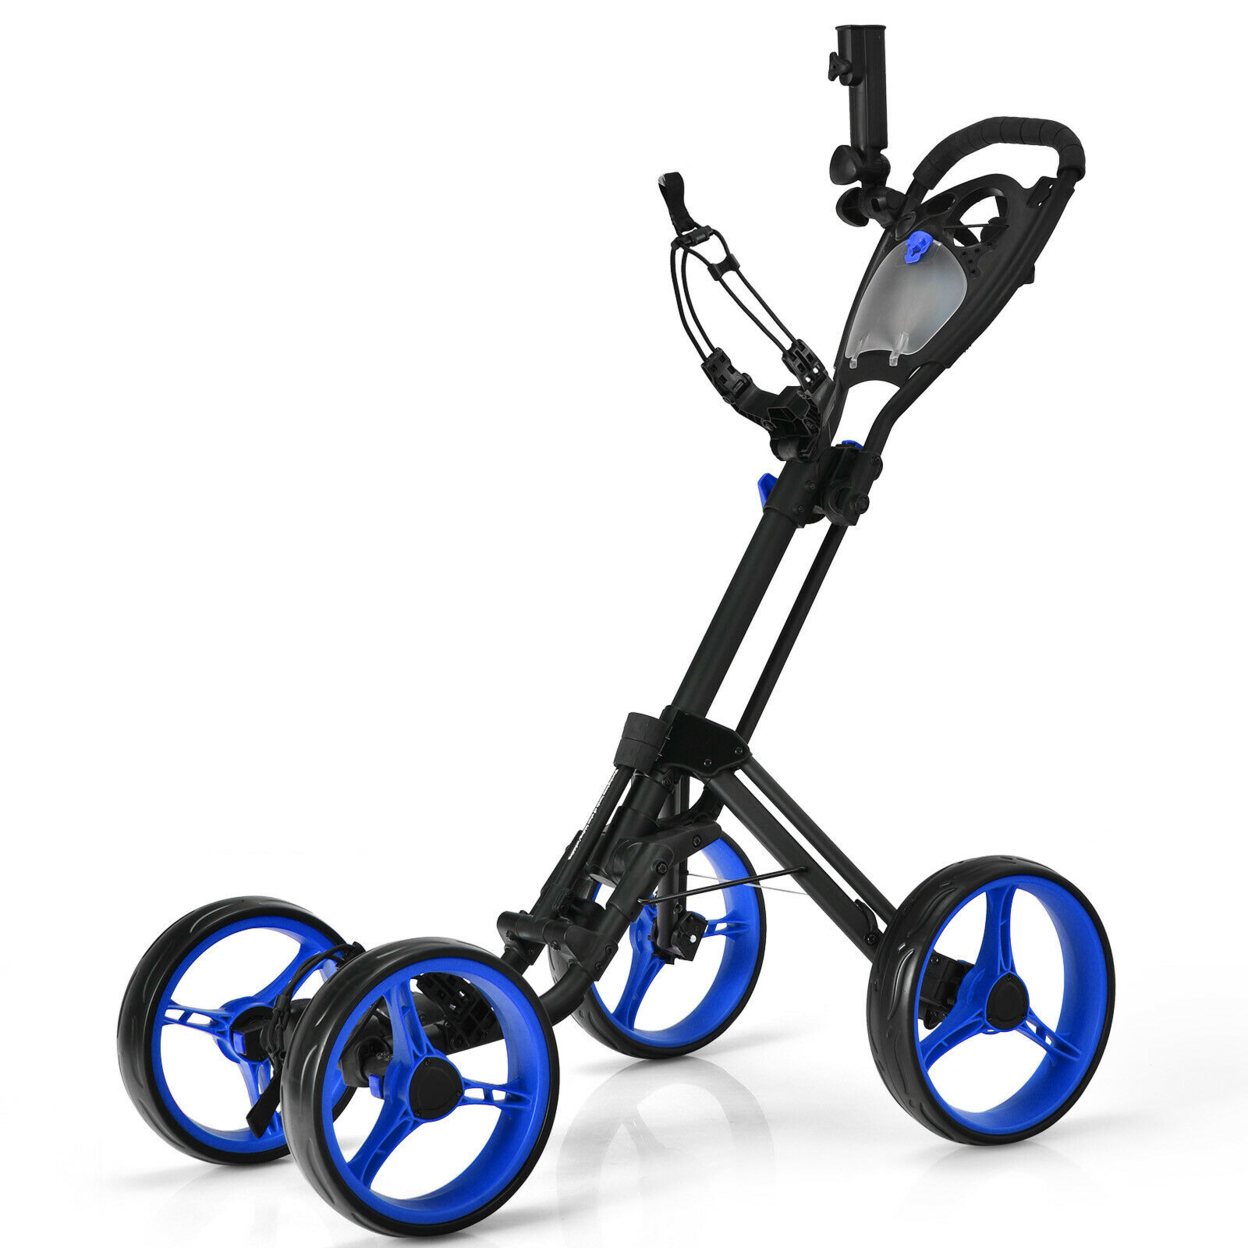 4 Wheels Folding Golf Push Cart W/ Adjustable Handle Foot Brake - Blue